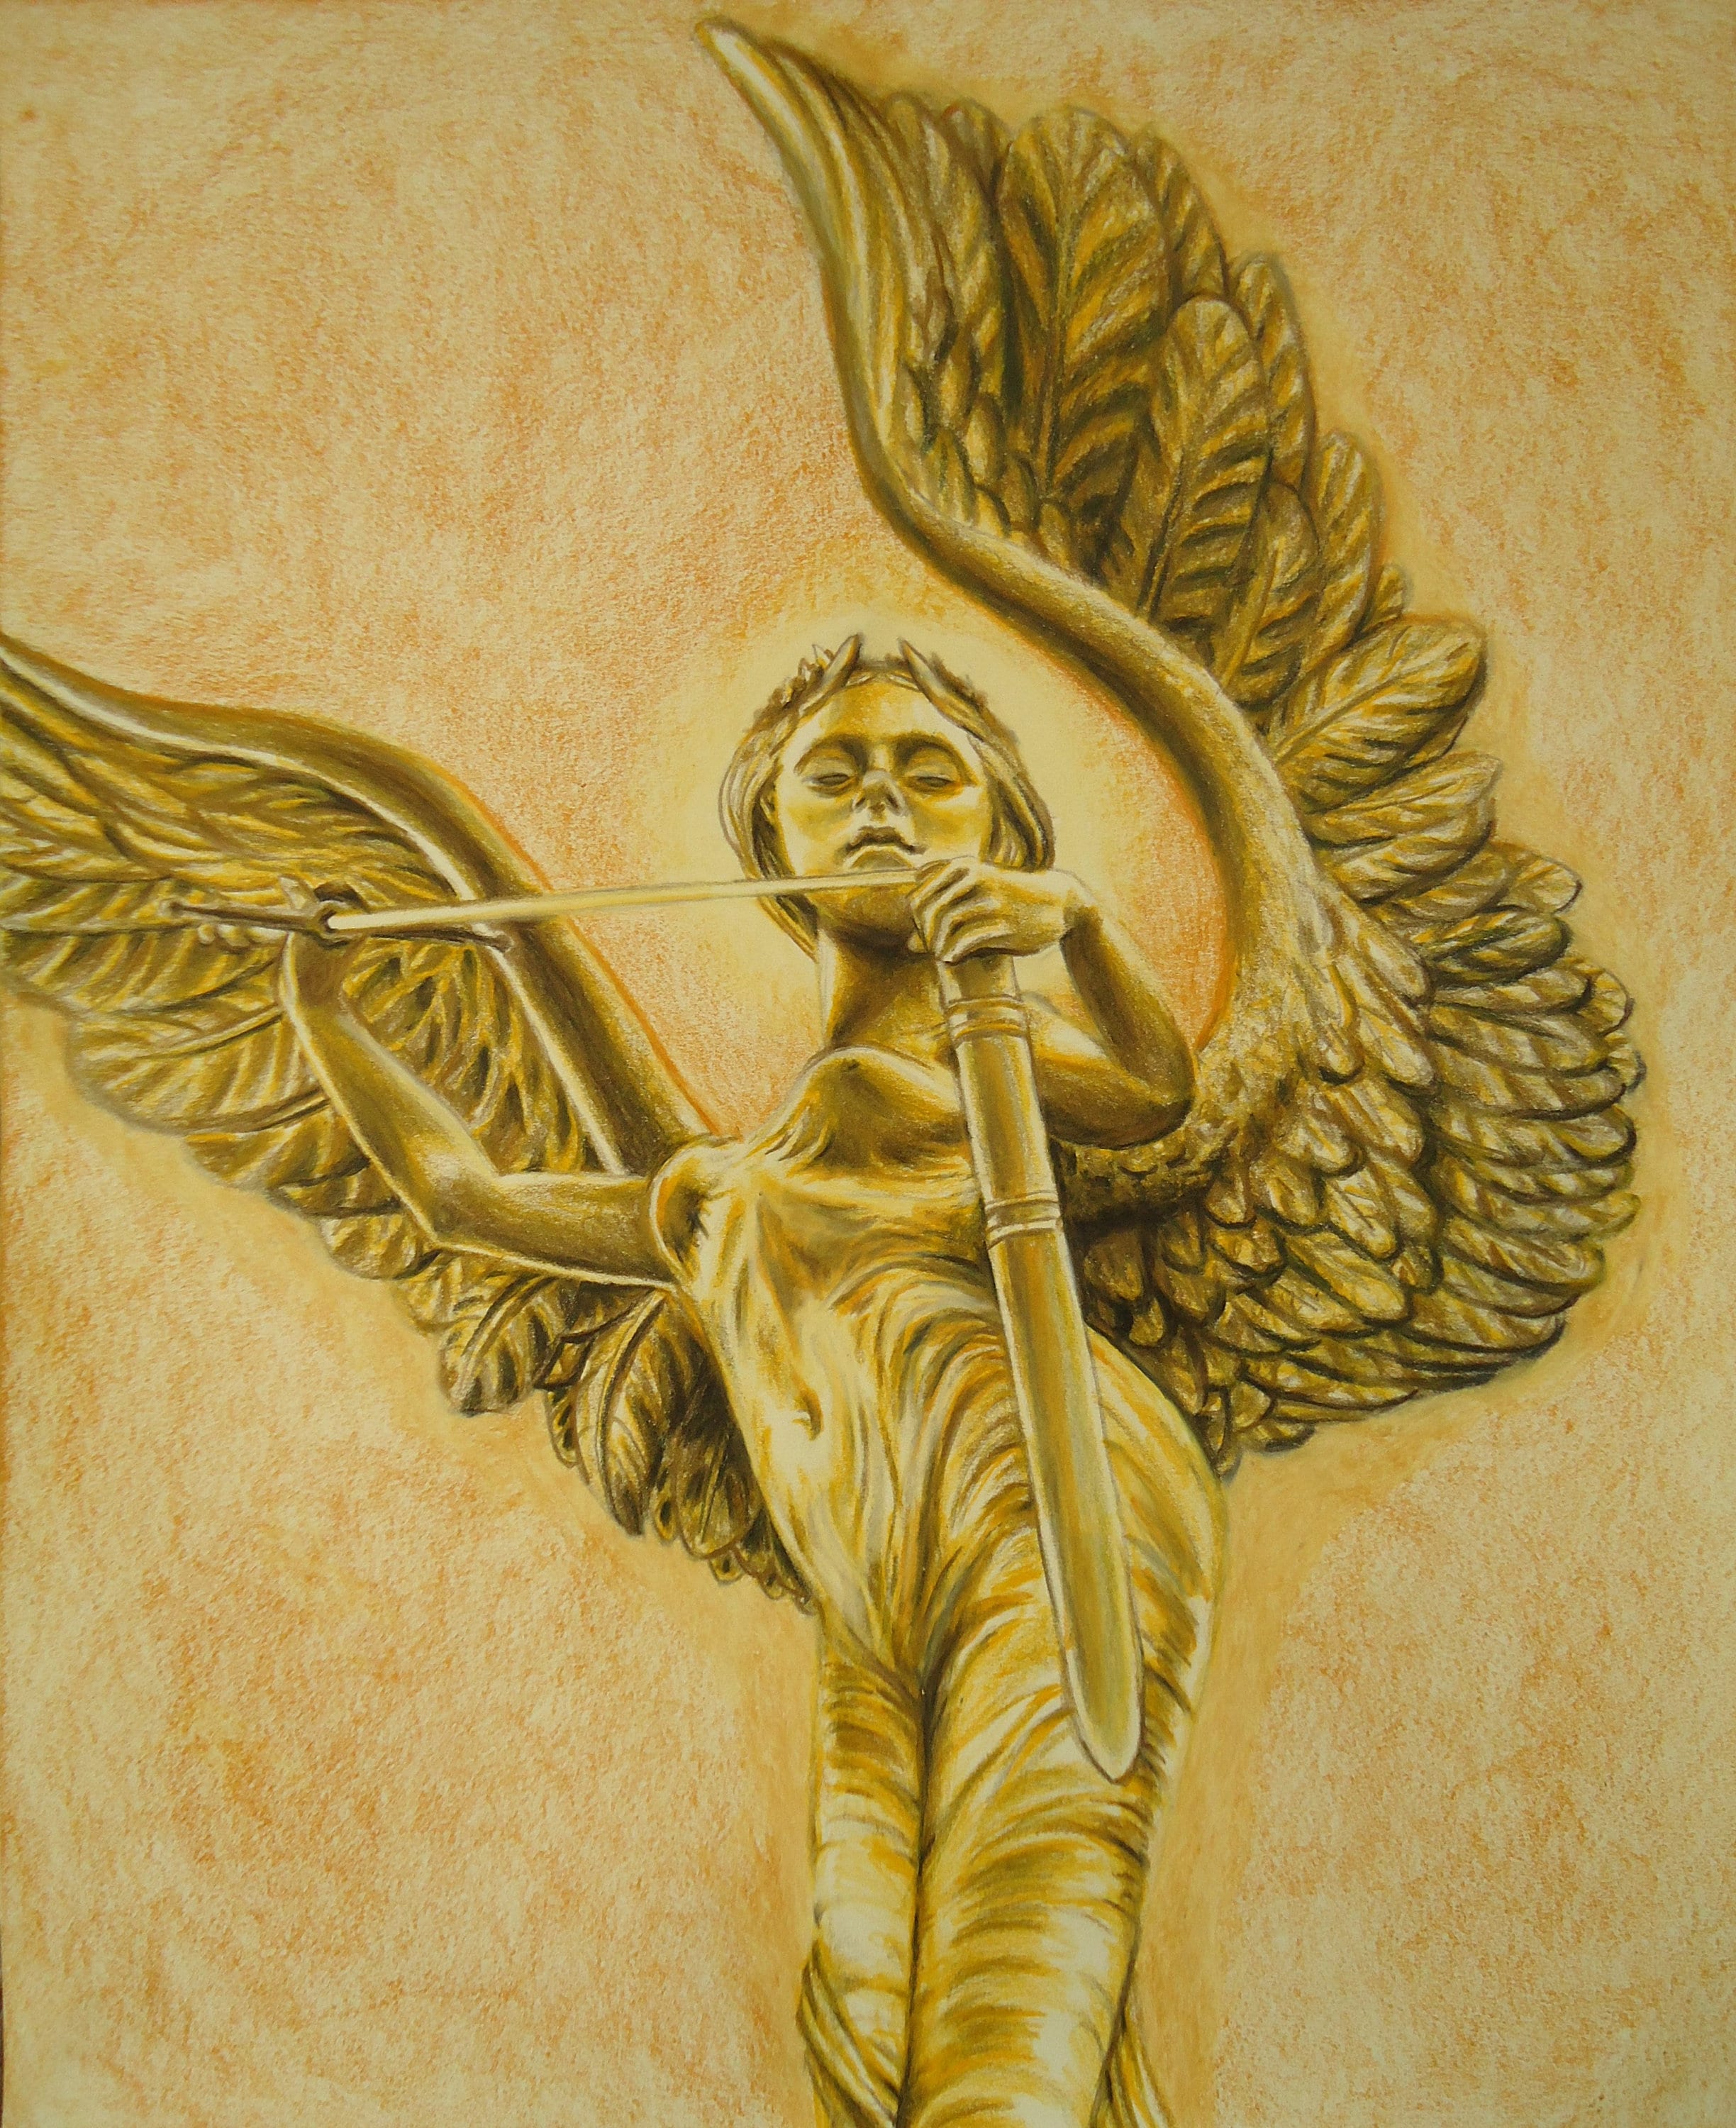 Angel Drawing: A Graceful Female Angel in a Few Lines